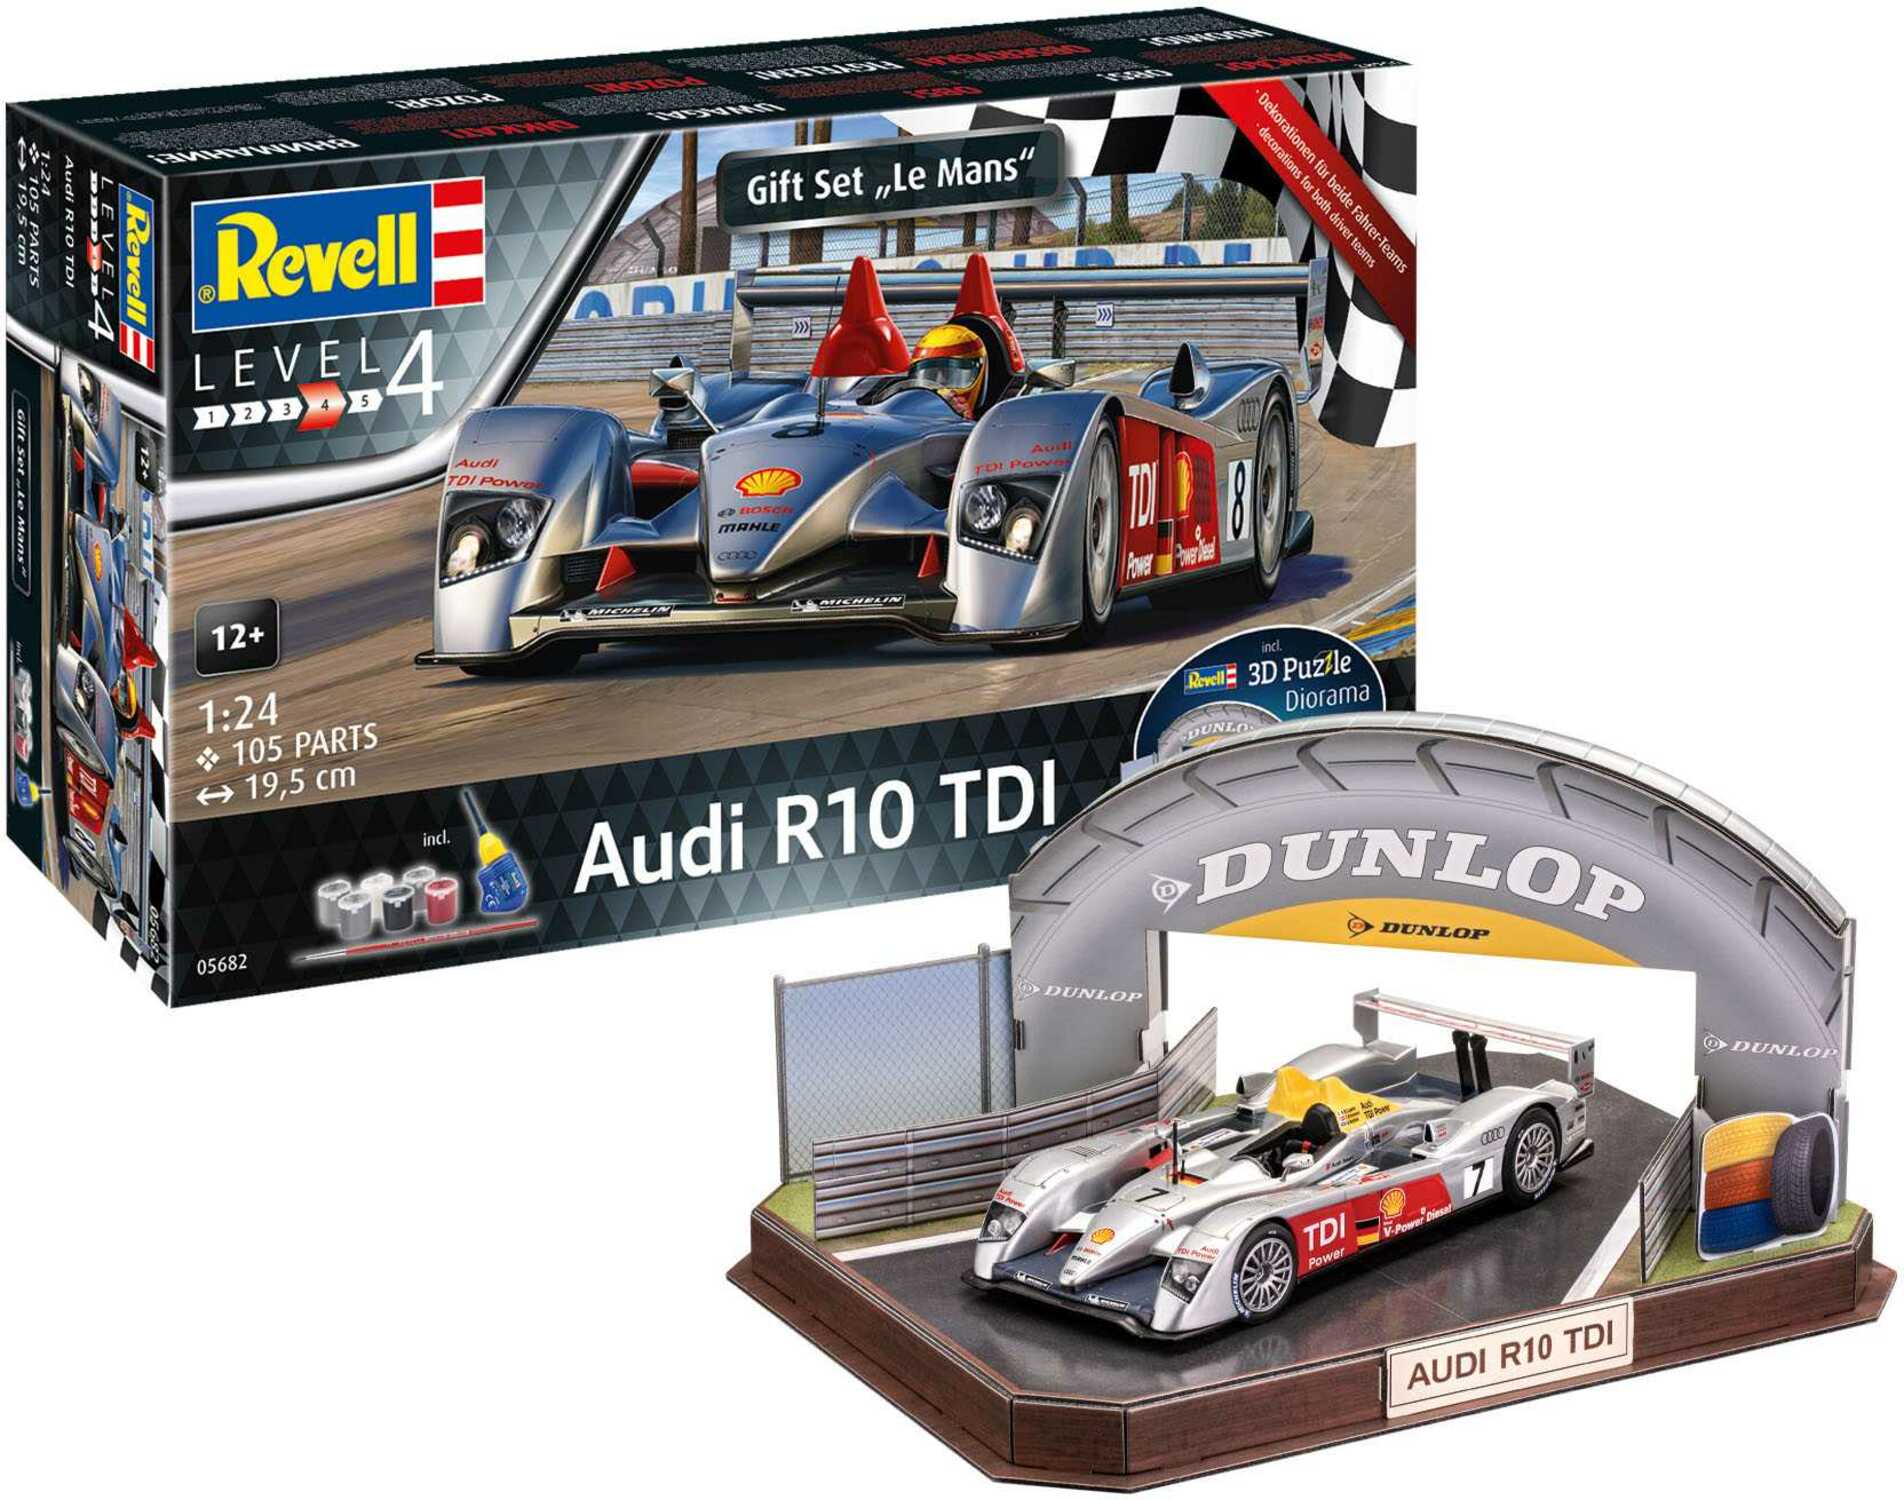 Gift-Set Diorama 05682 - Audi R10 TDI + 3D Puzzle (LeMans Racetrack) (1:24)